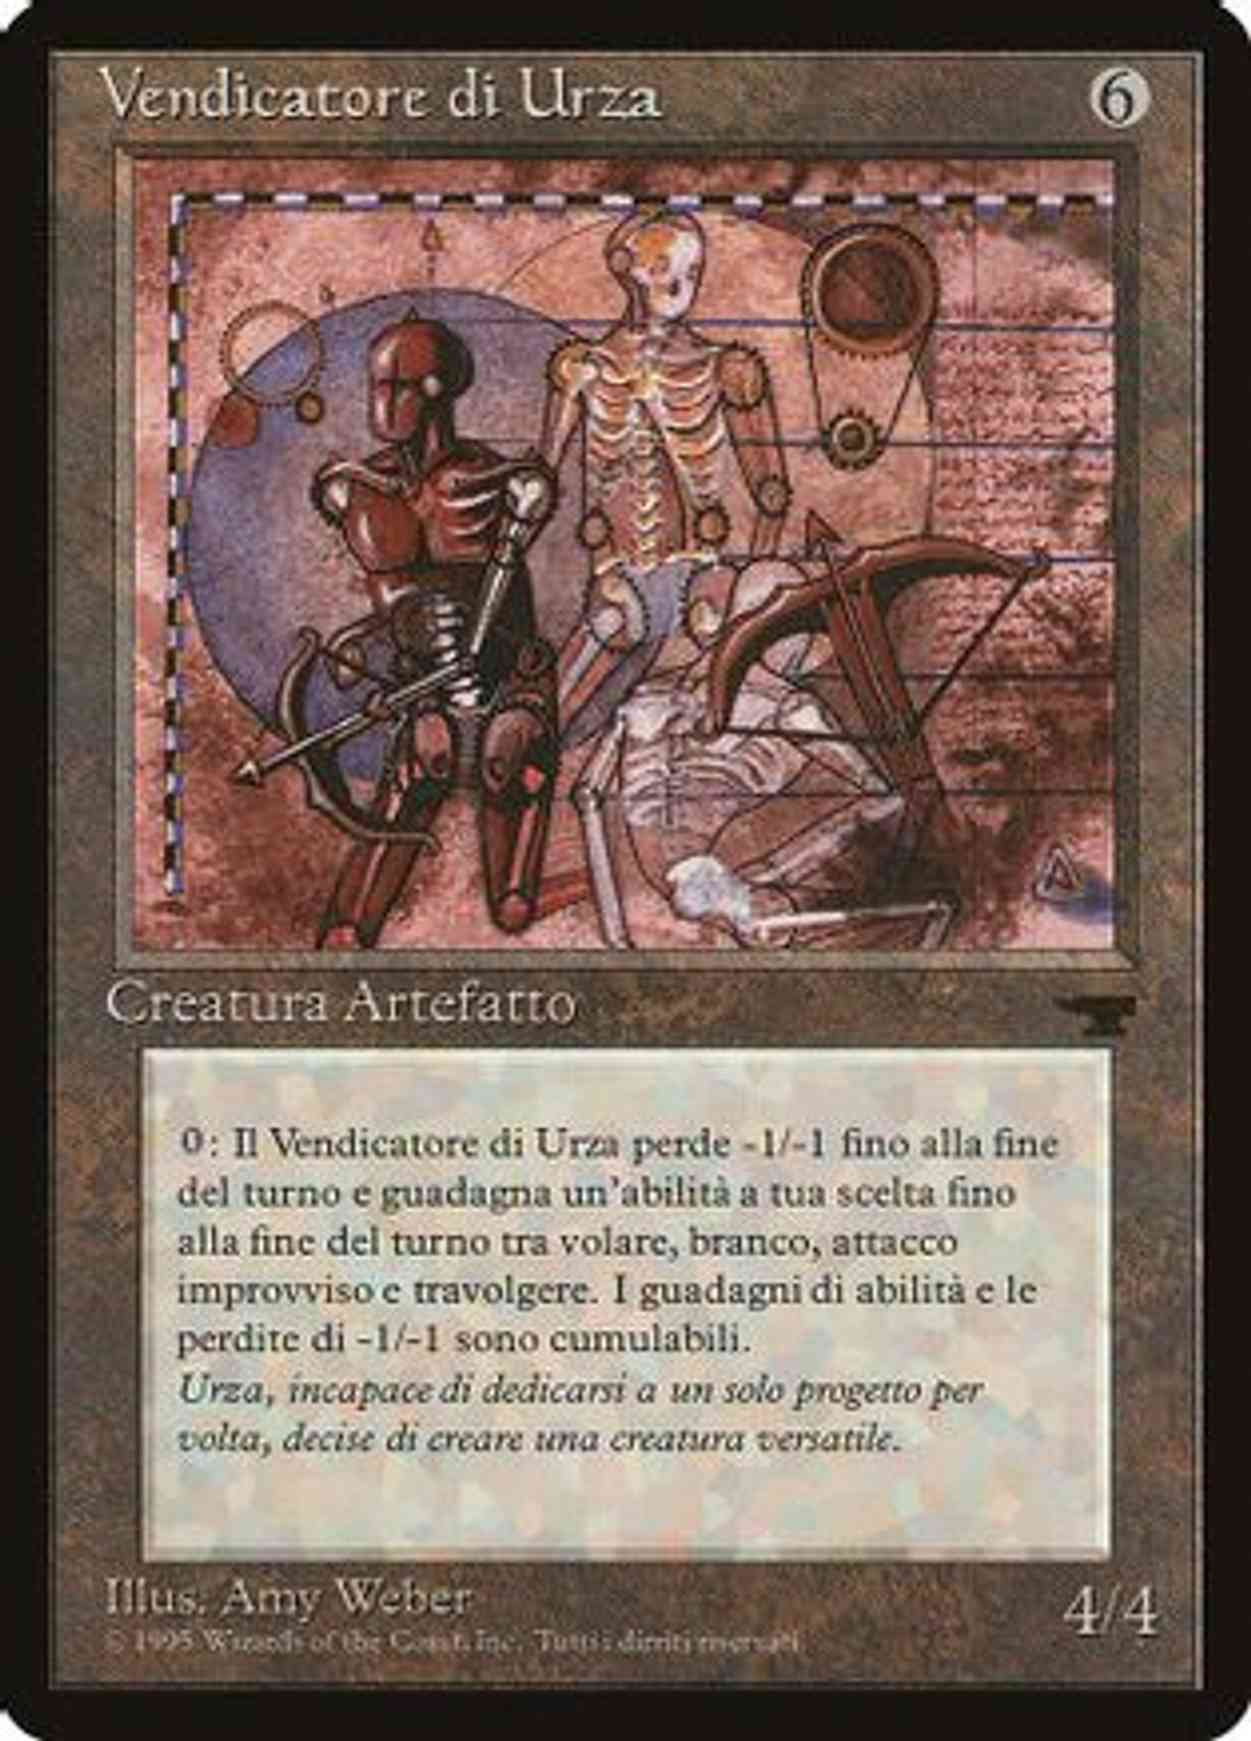 Urza's Avenger (Italian) - "Vendicatore di Urza" magic card front